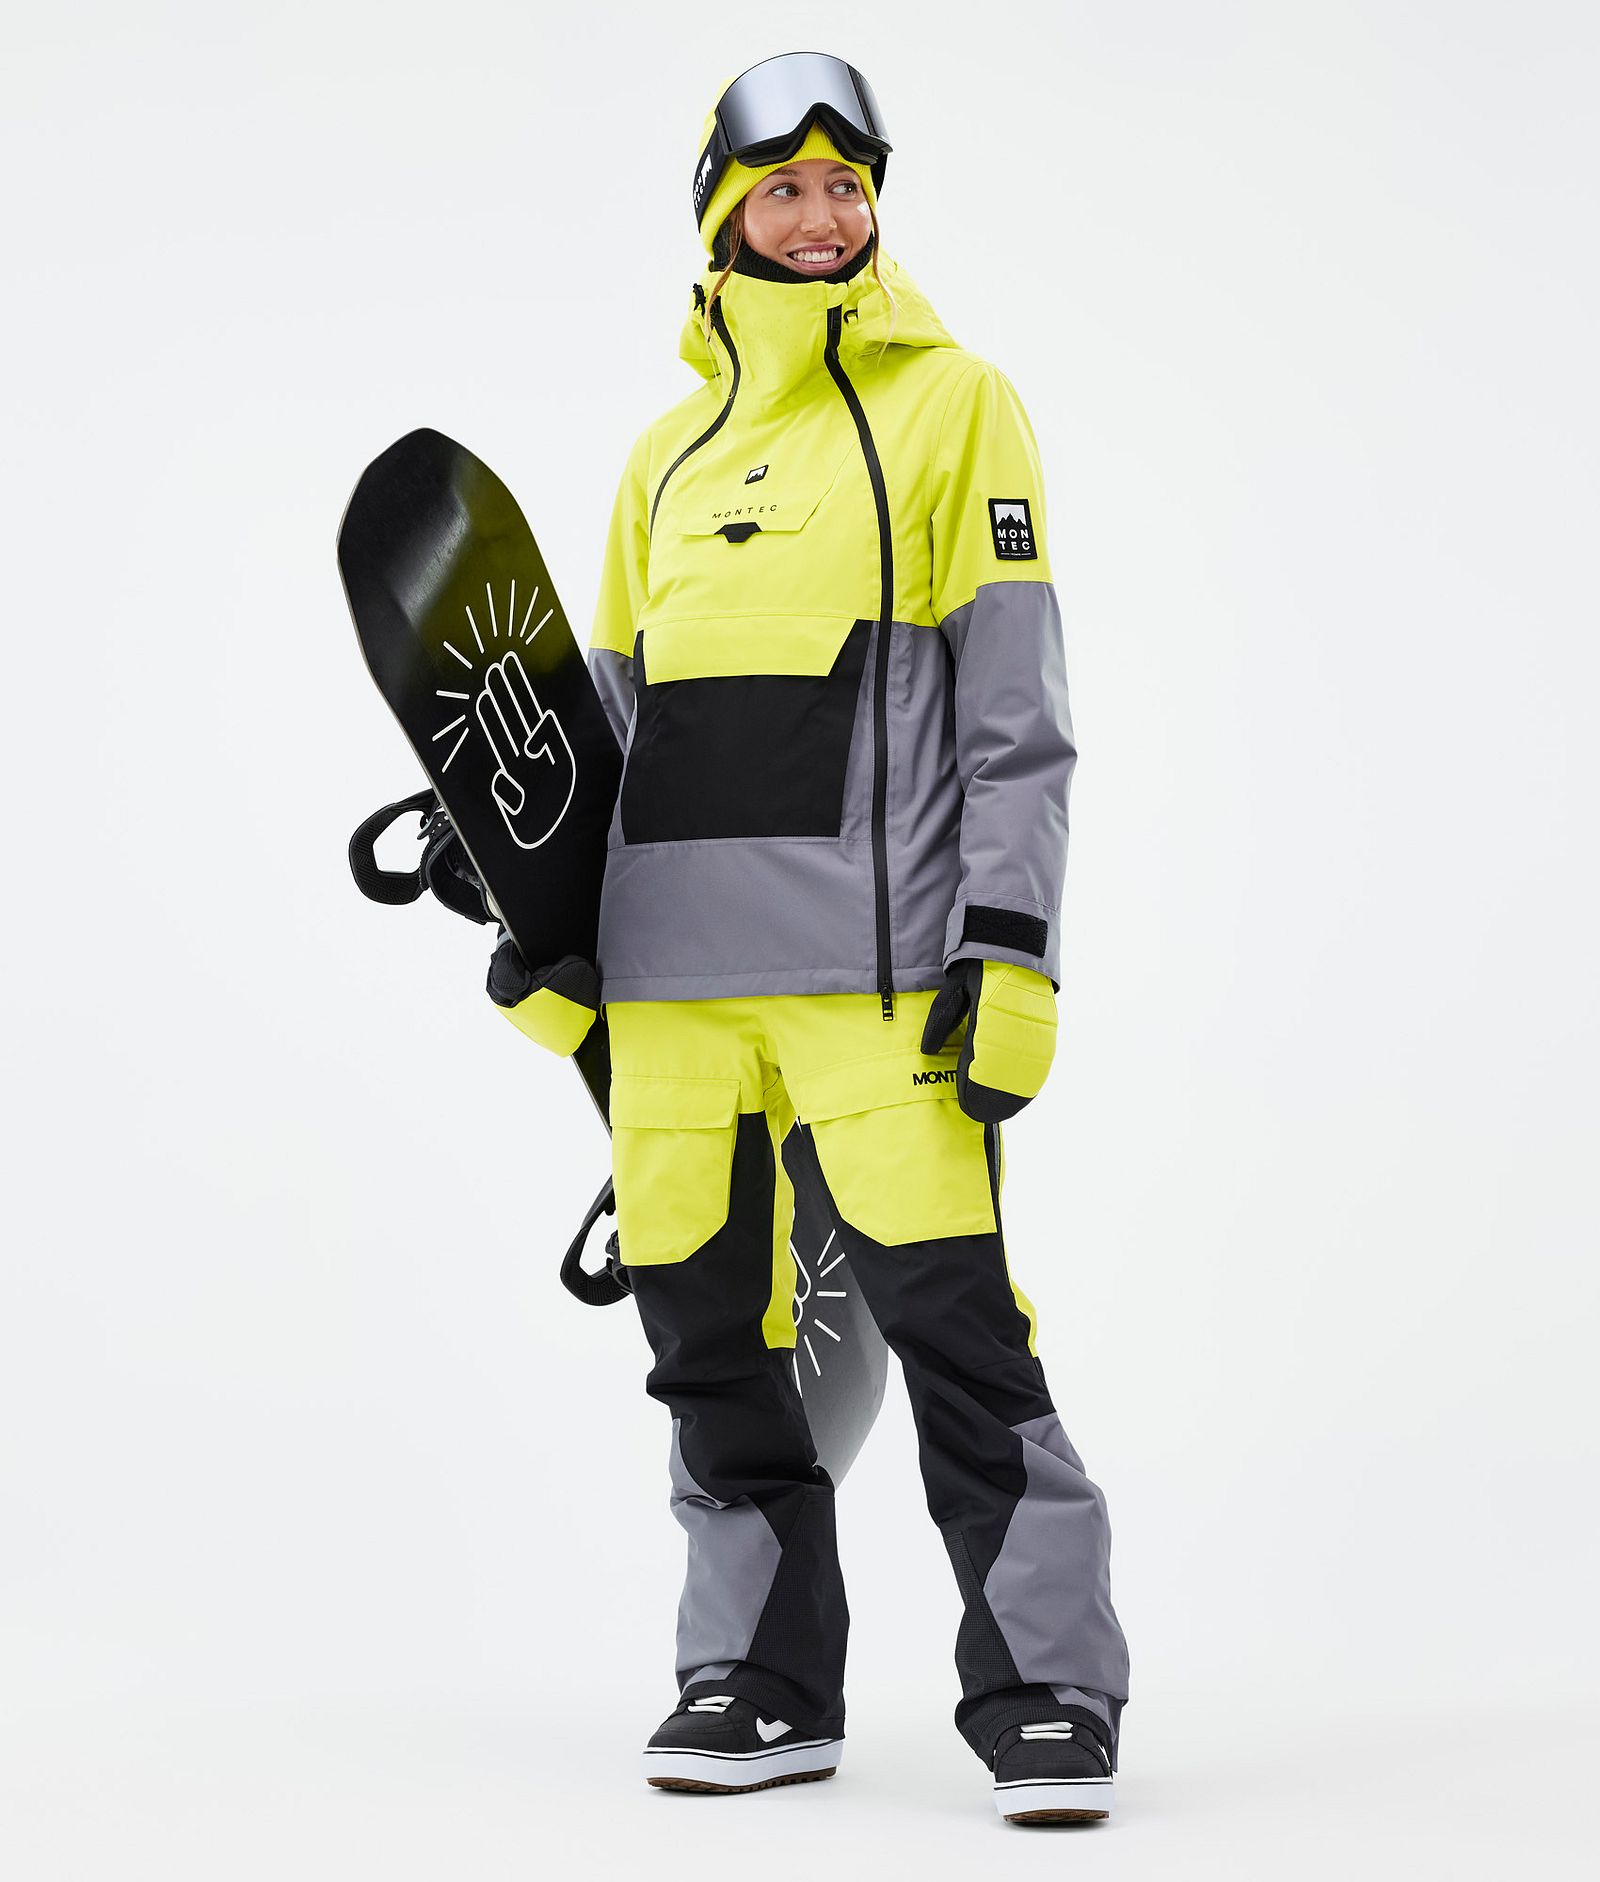 Montec Fawk W Snowboardhose Damen Bright Yellow/Black/Light Pearl